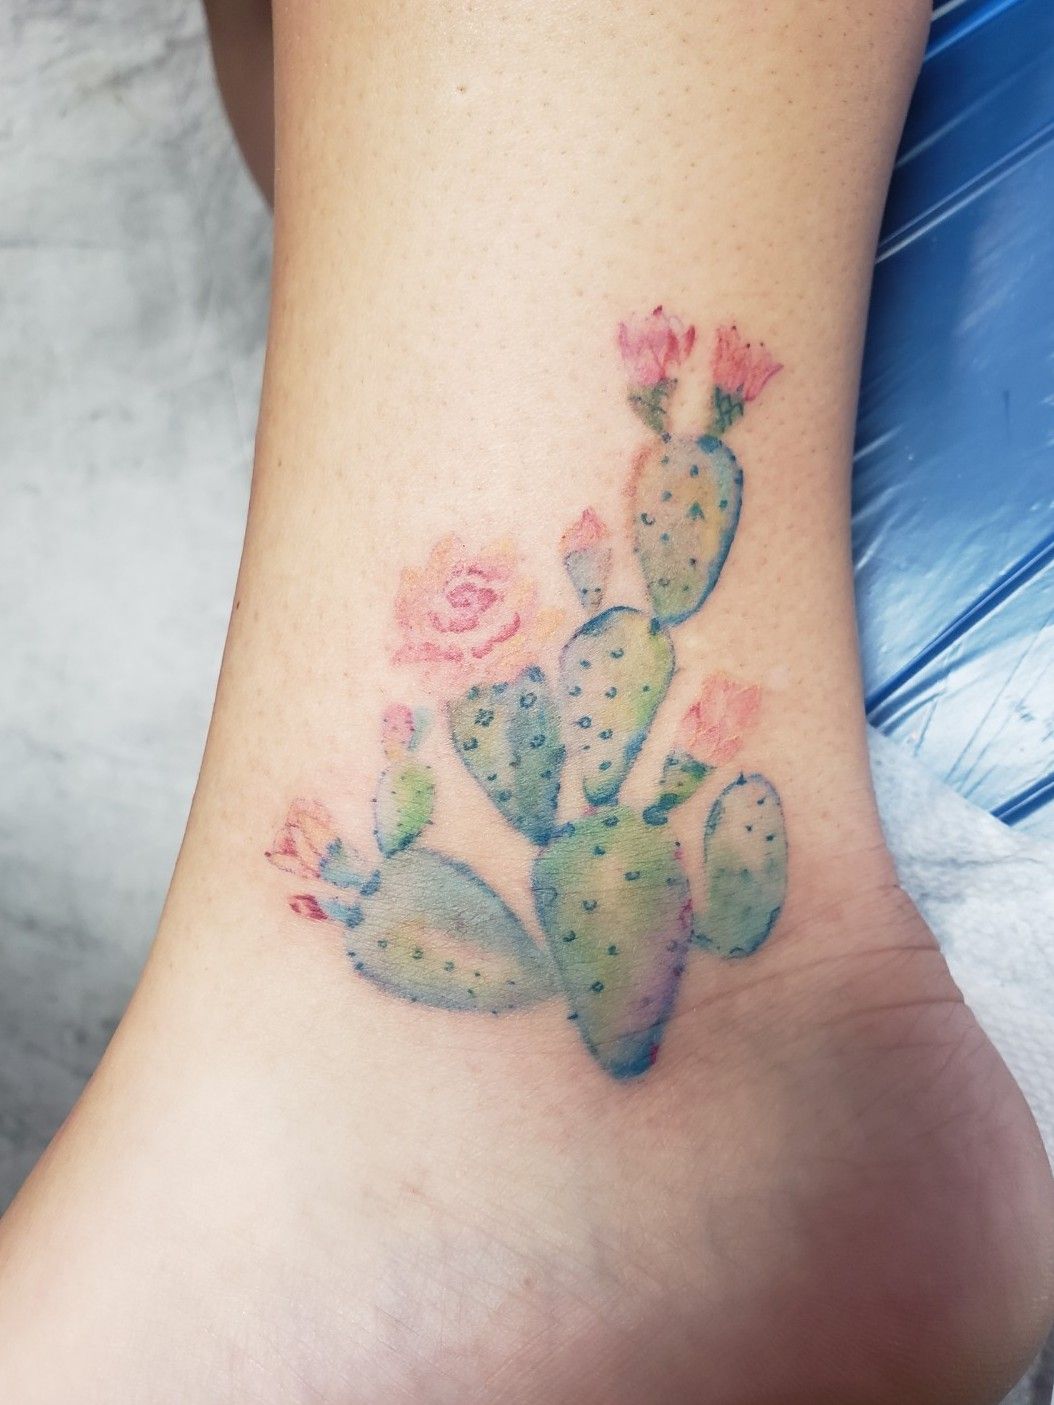 TattooGrid on Twitter Prickly pear tattoo by justinoliviertattoo  httpstco6zsaeESPTa httpstcot1VrzuRhRJ  Twitter